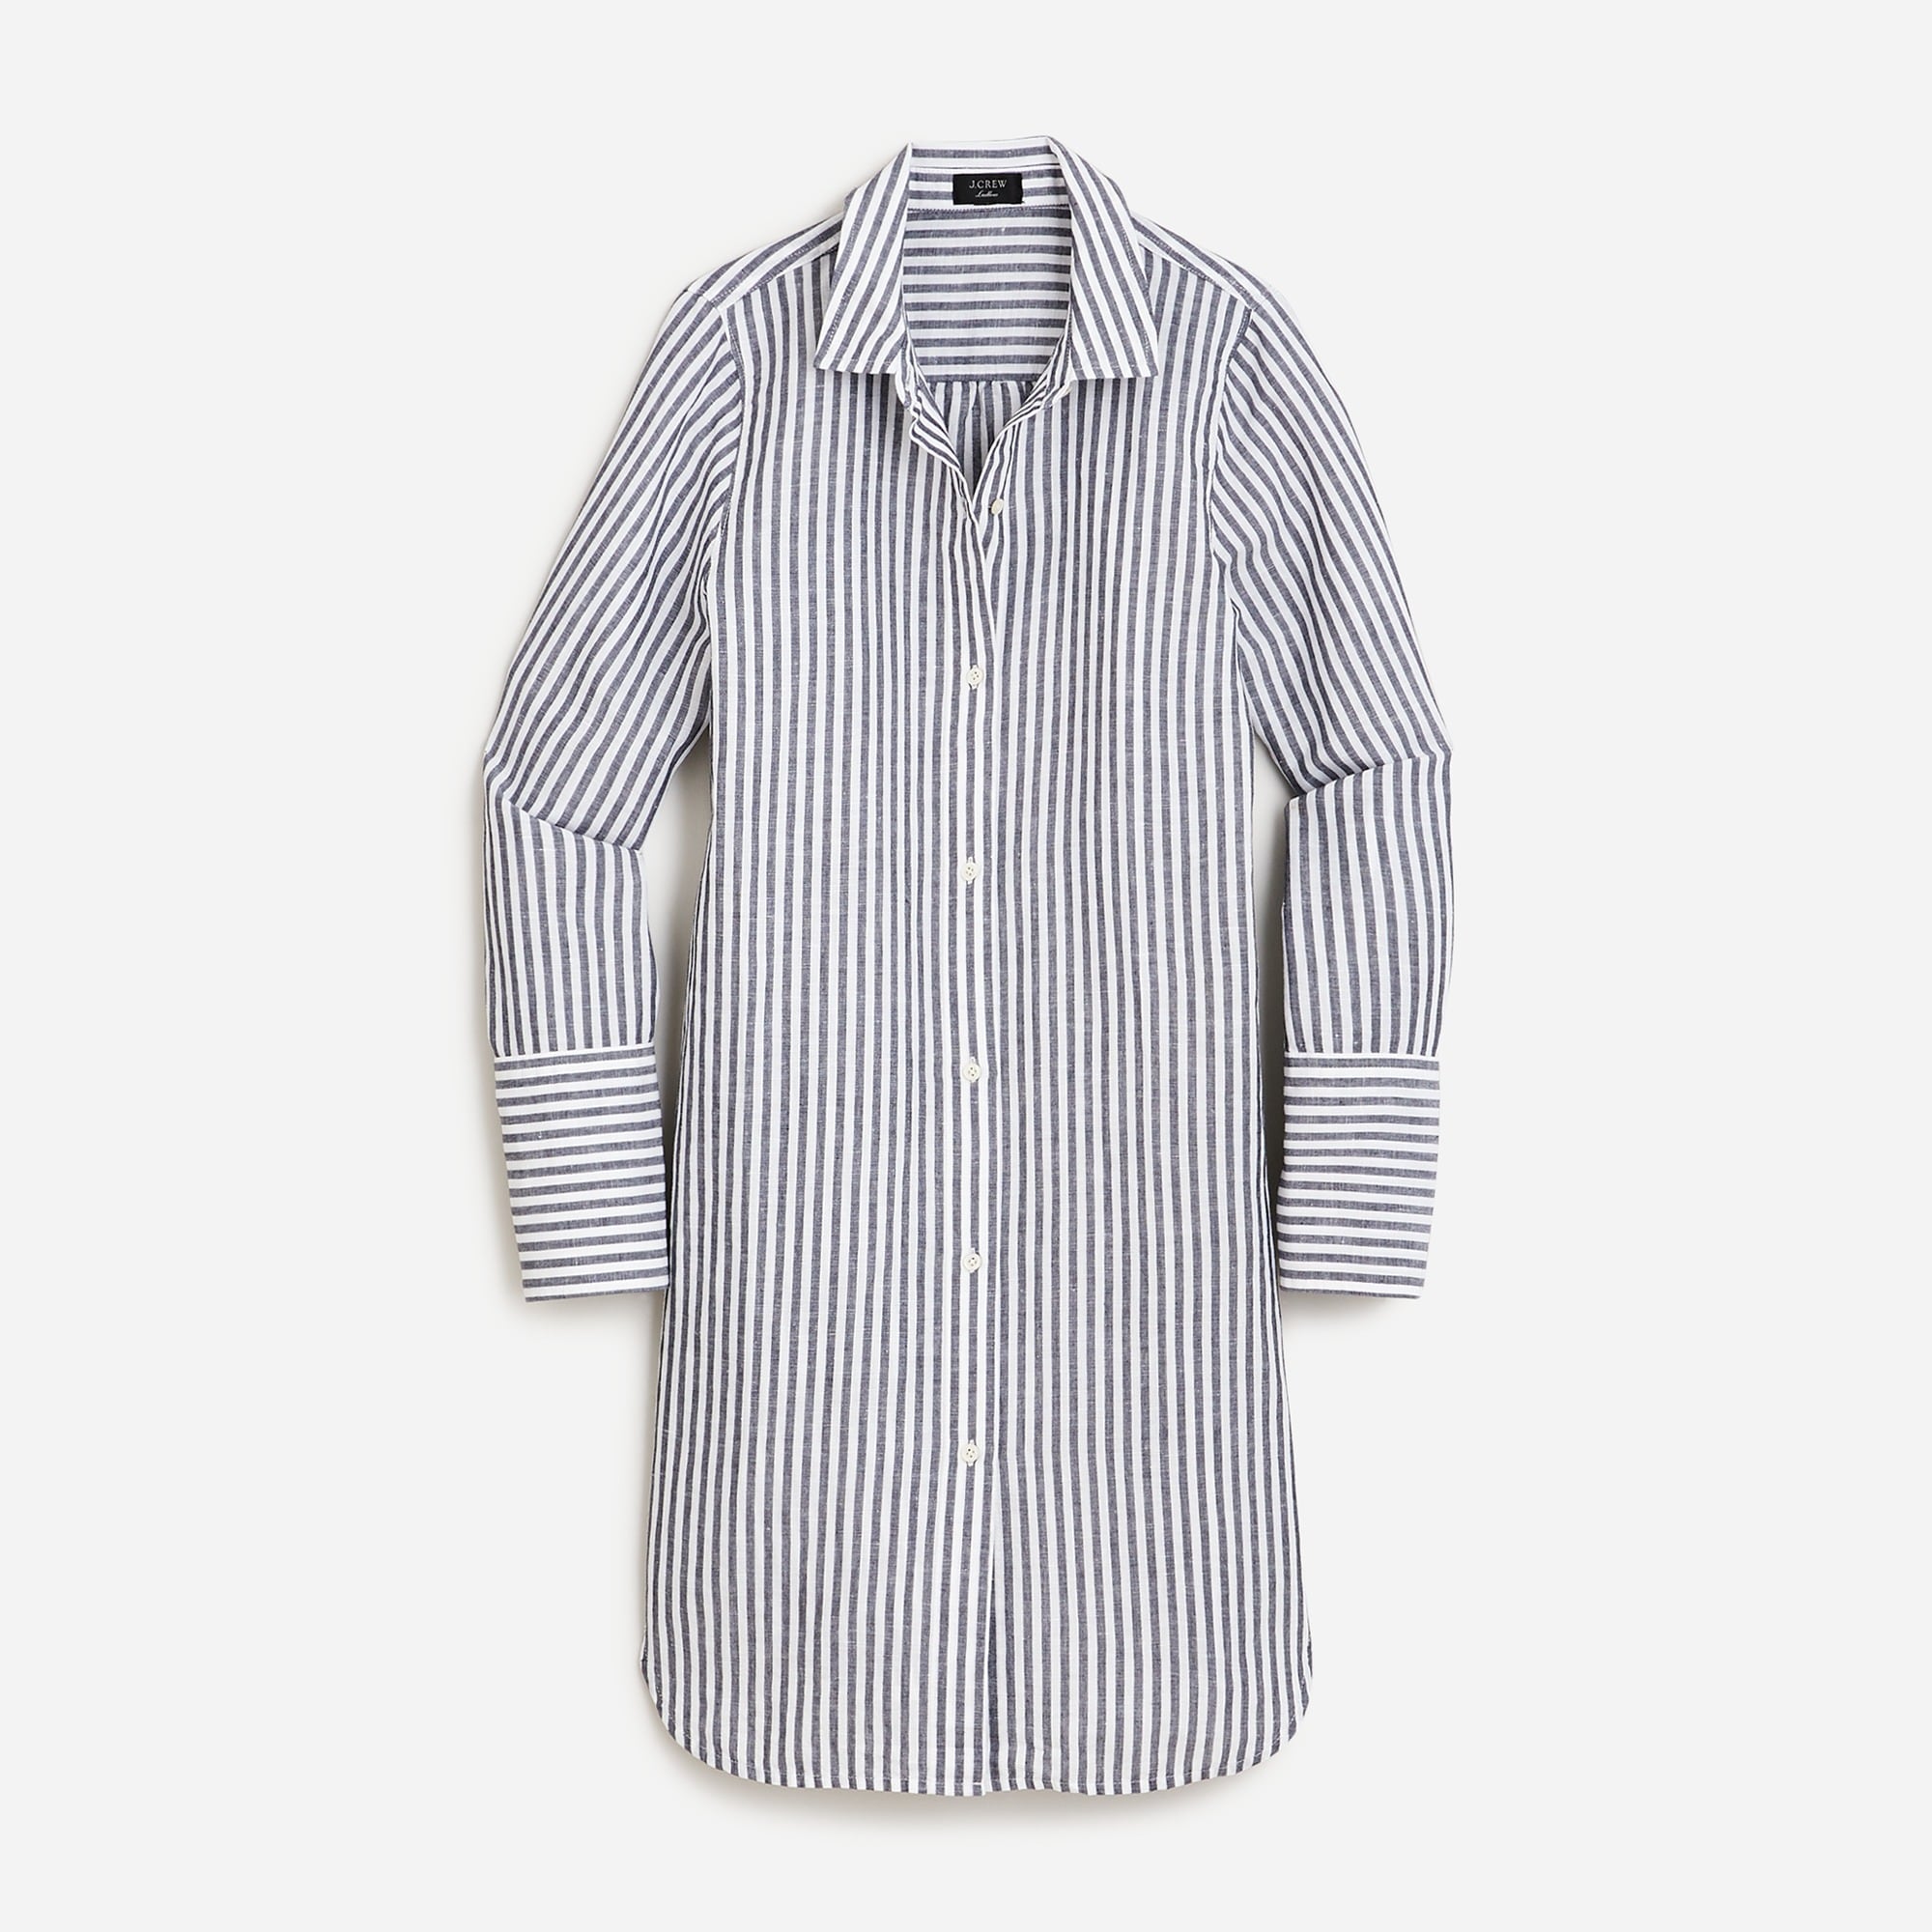  Classic-fit beach shirt in striped linen-cotton blend